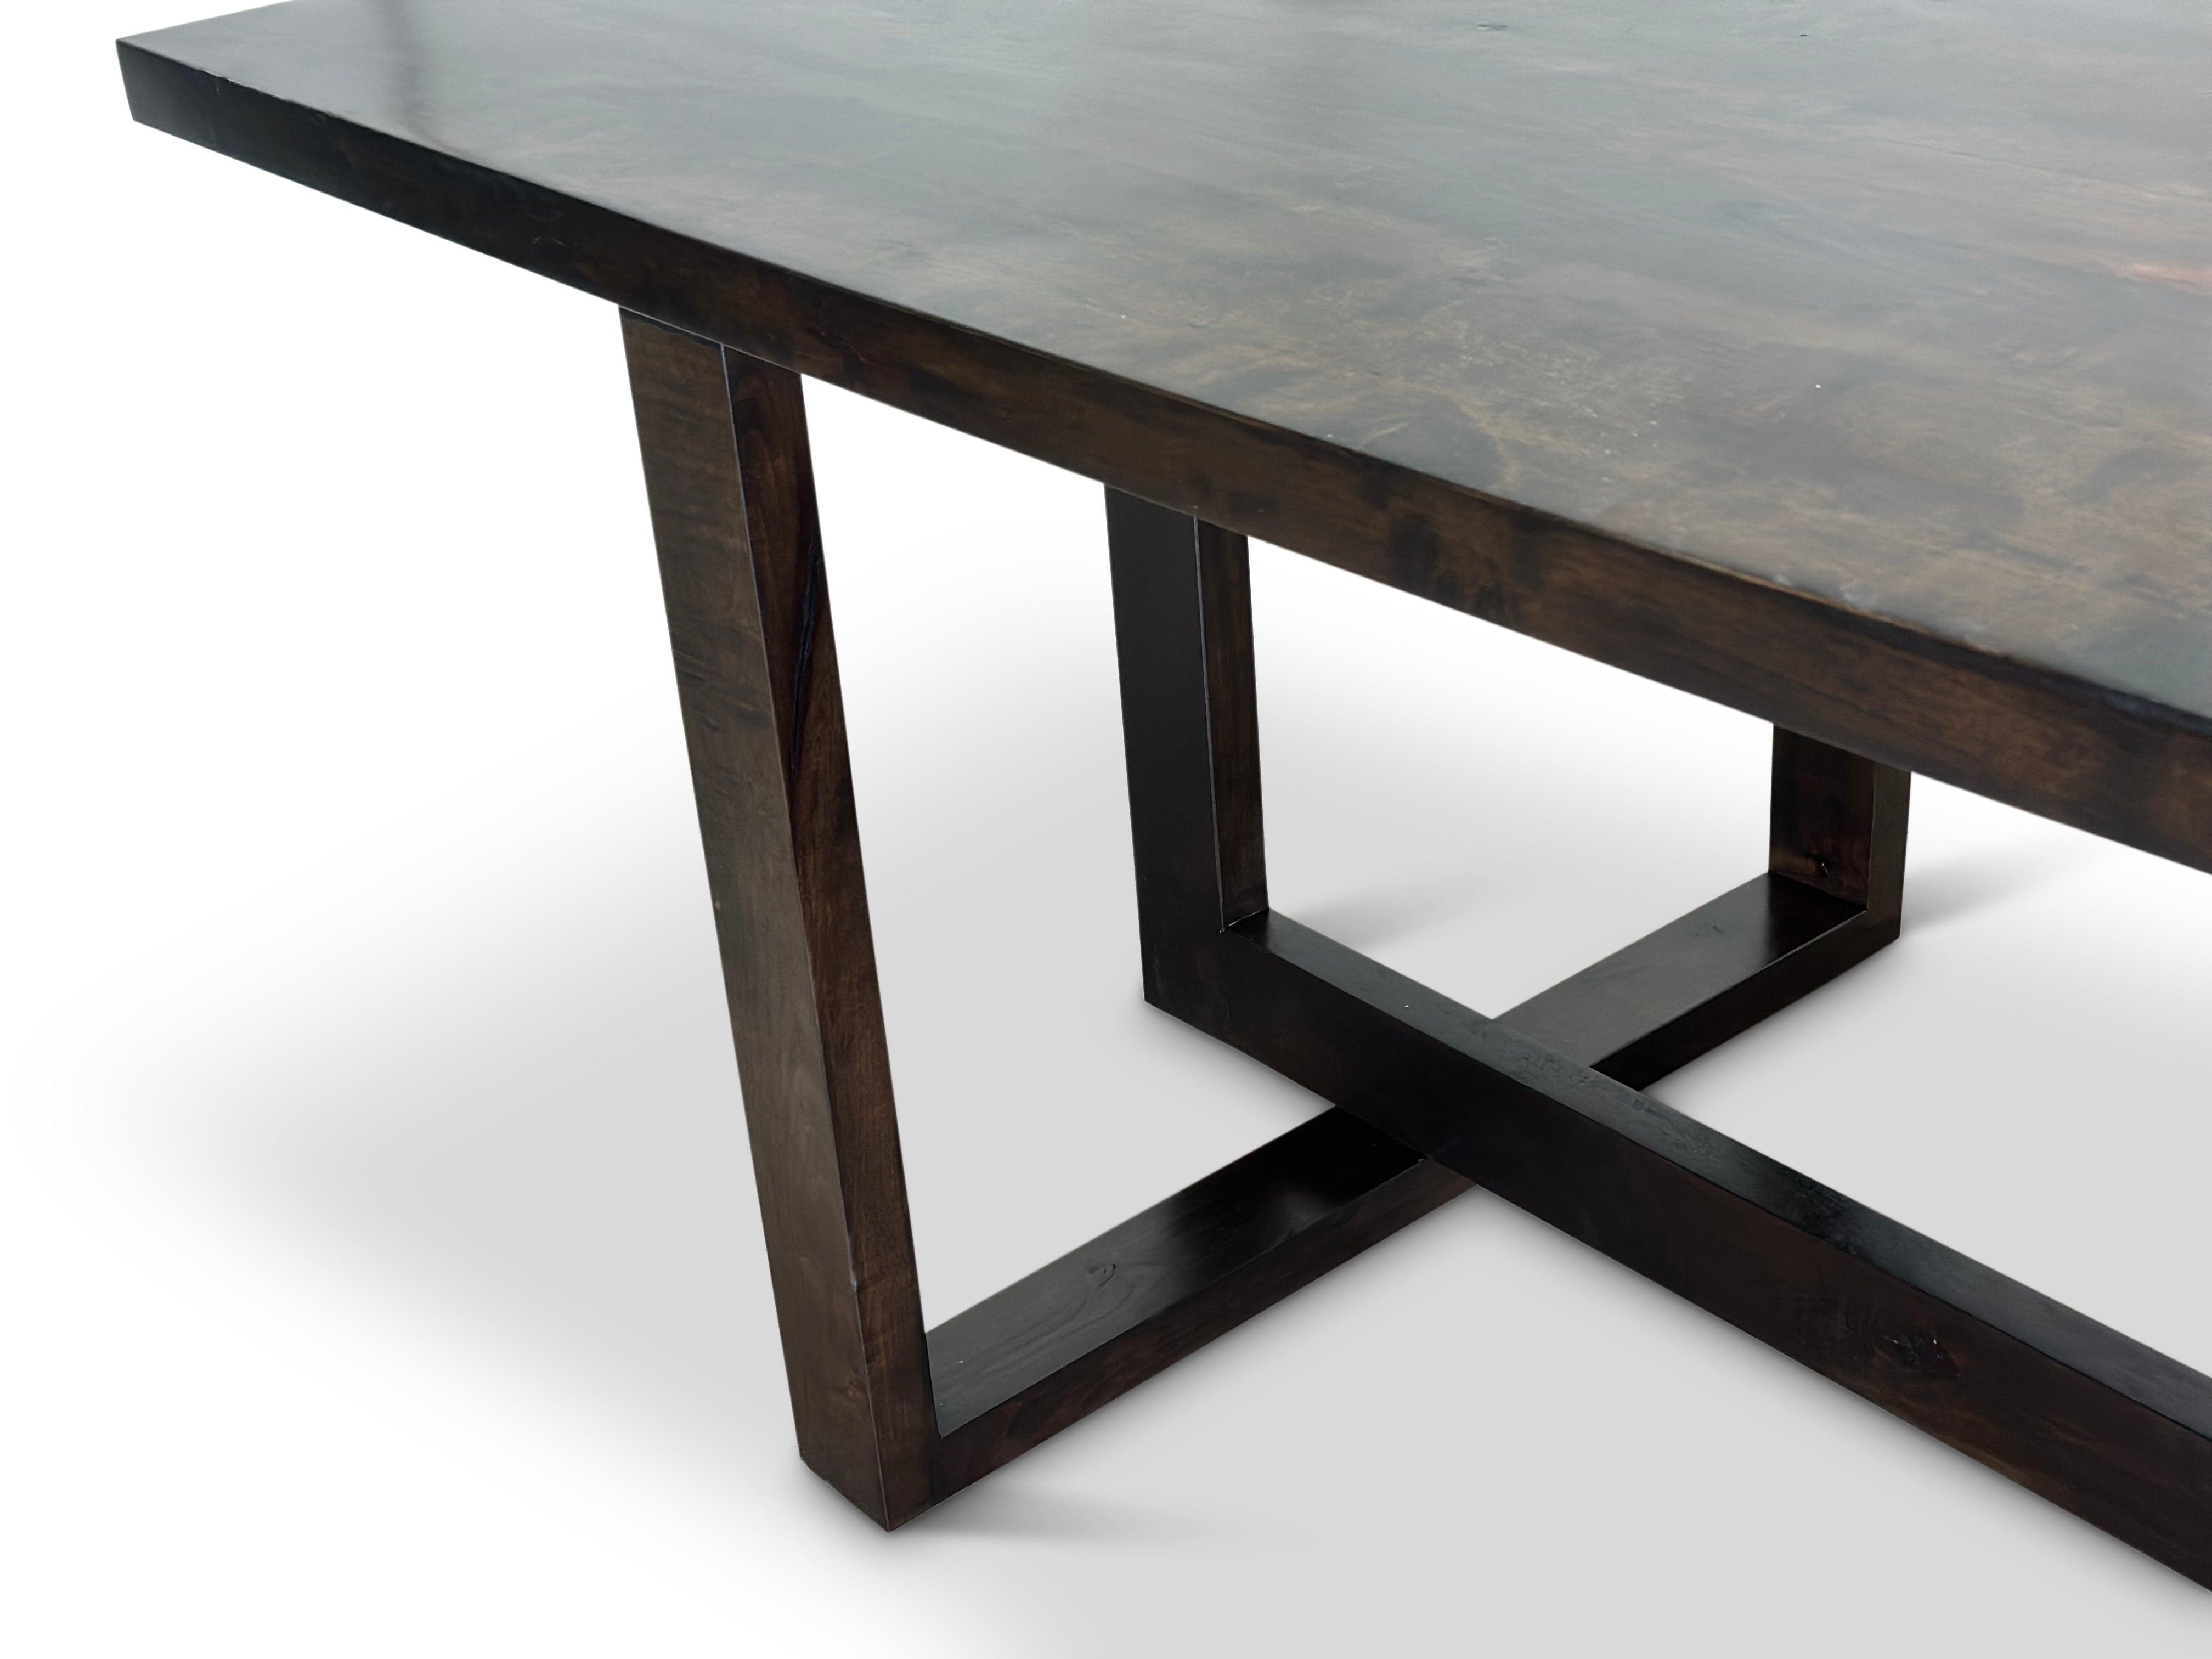 Floating Timber Frame Dining Table - Innate Furniture